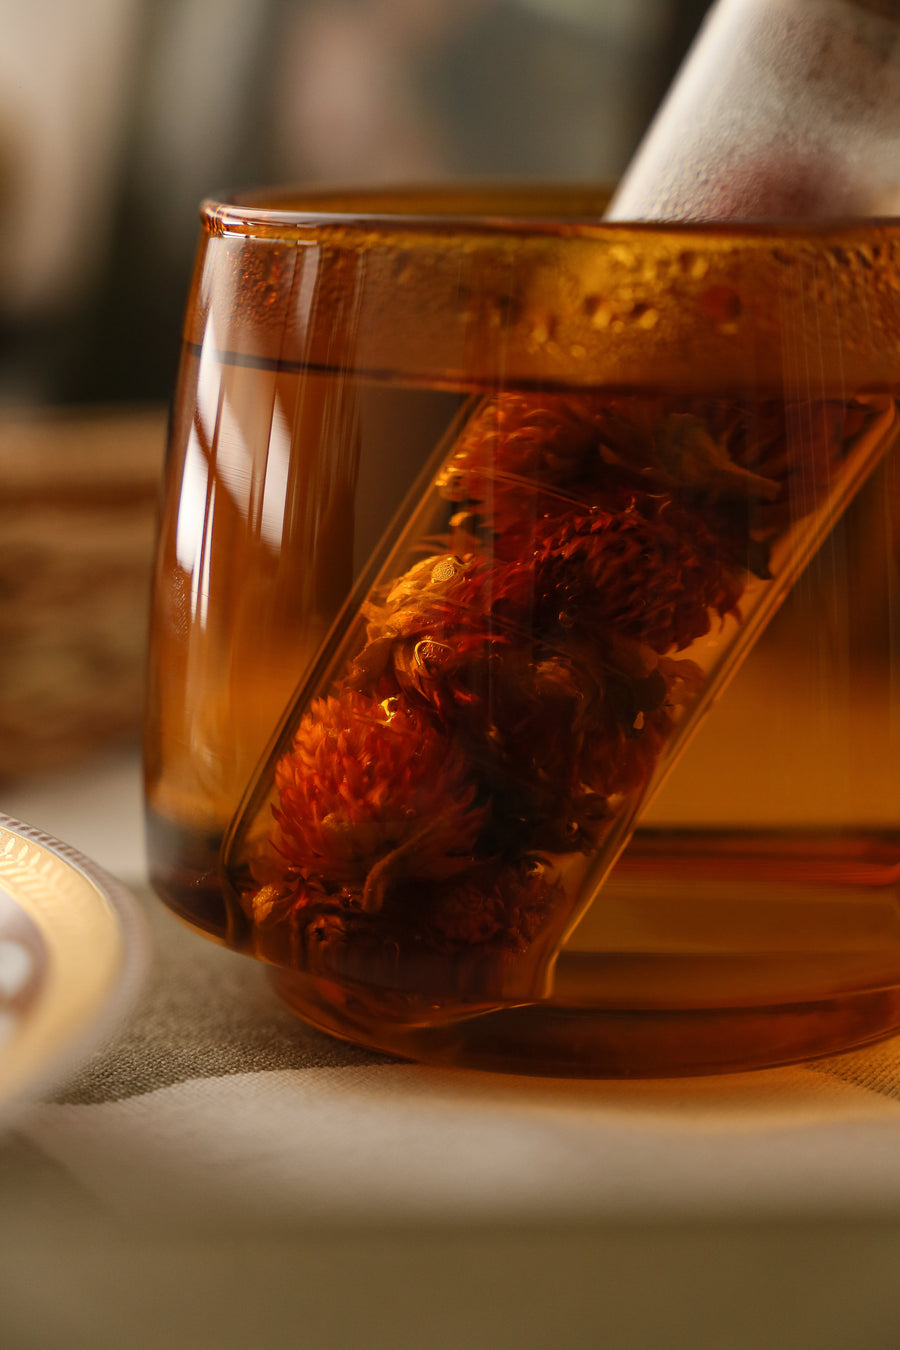 Glass tea infuser